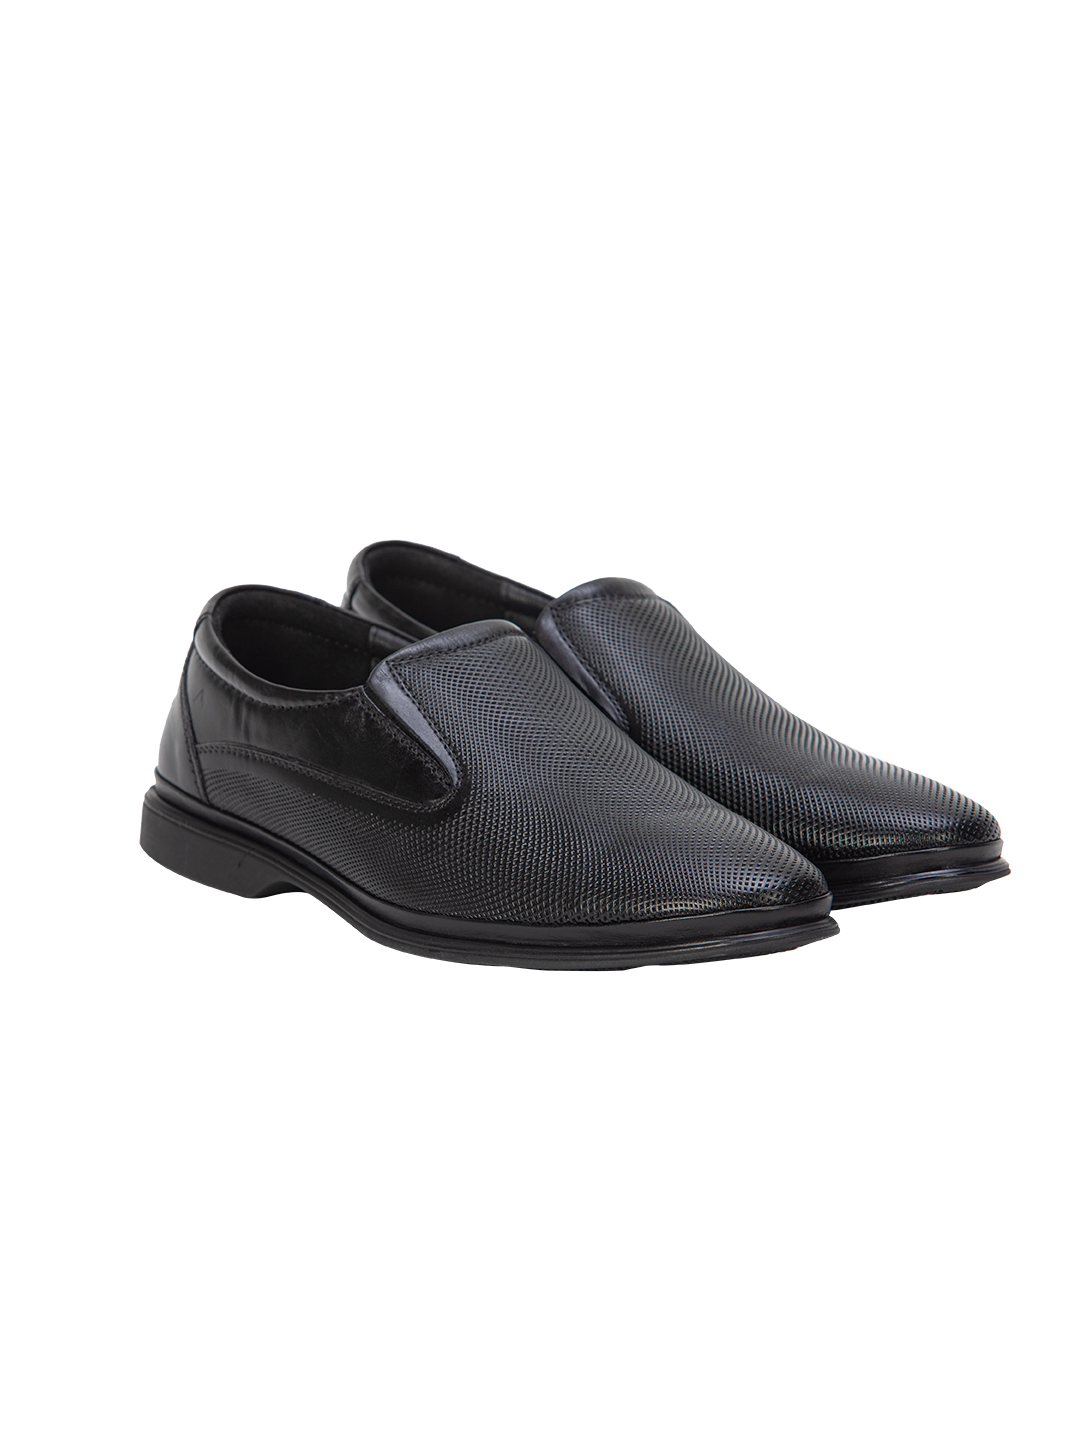 Buy Von Wellx Germany Comfort Mondaine Casual Black Shoes Online in Ludhiana